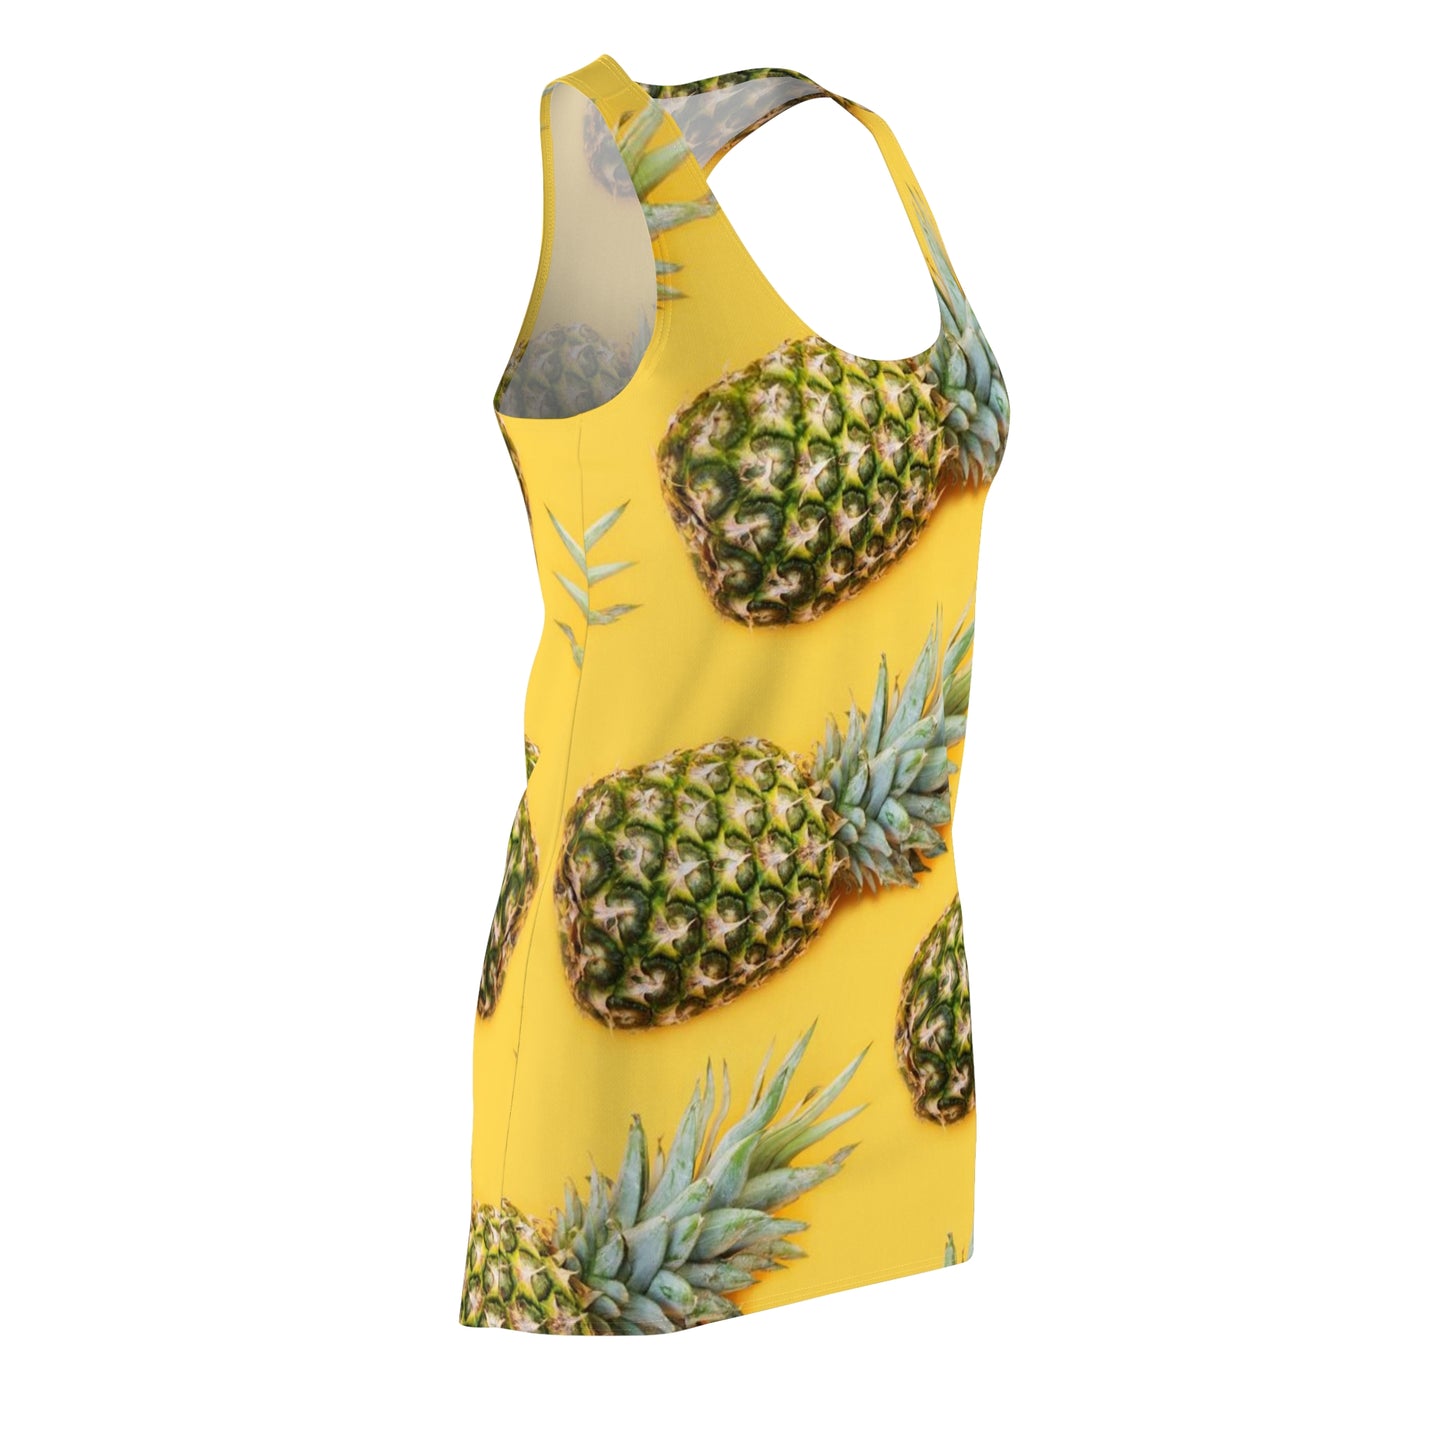 Pineapple - Inovax Women's Cut & Sew Racerback Dress